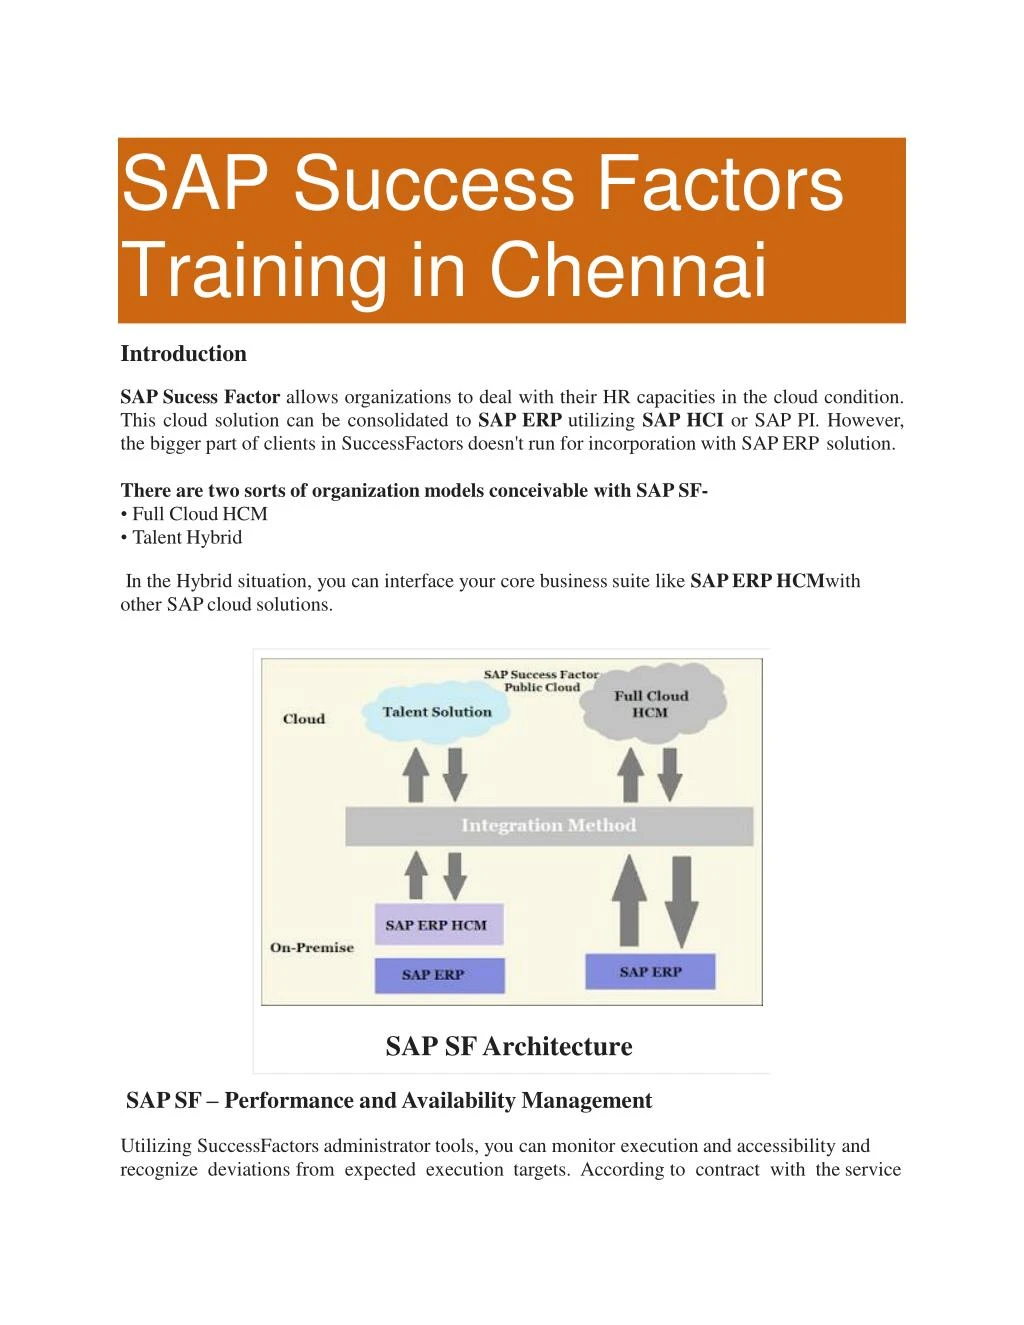 sap success factors training in chennai